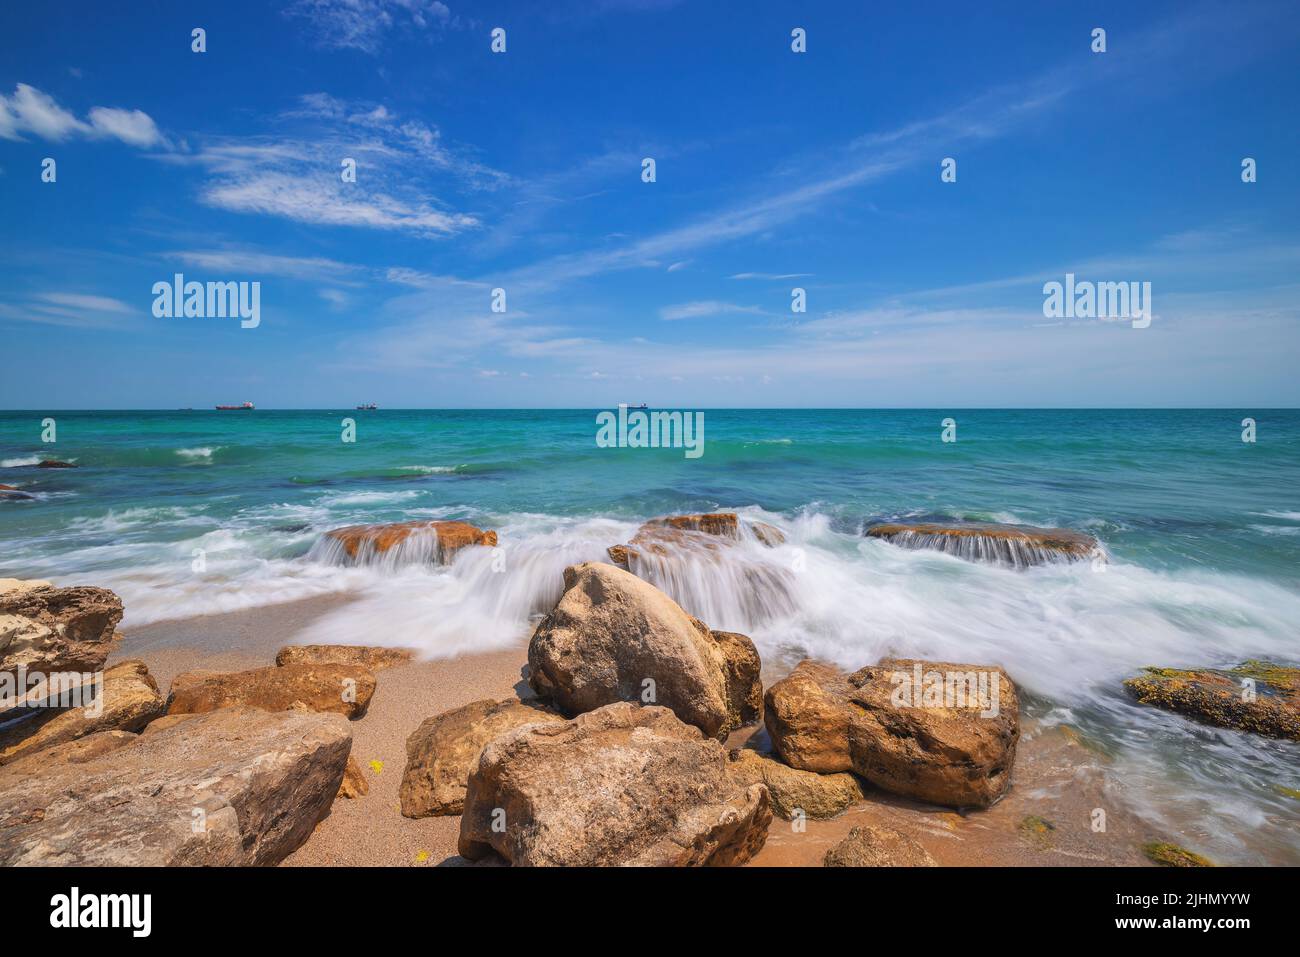 Wild exotic beach with rocks in sea water. Rocky island coastline Stock Photo